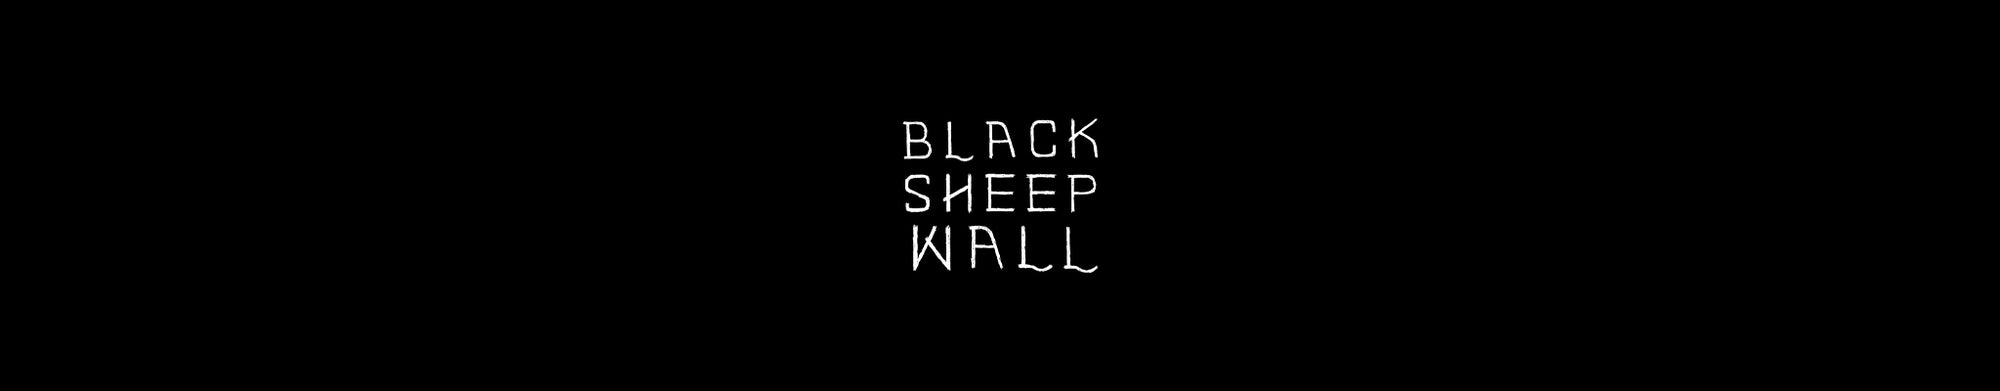 BLACK SHEEP WALL